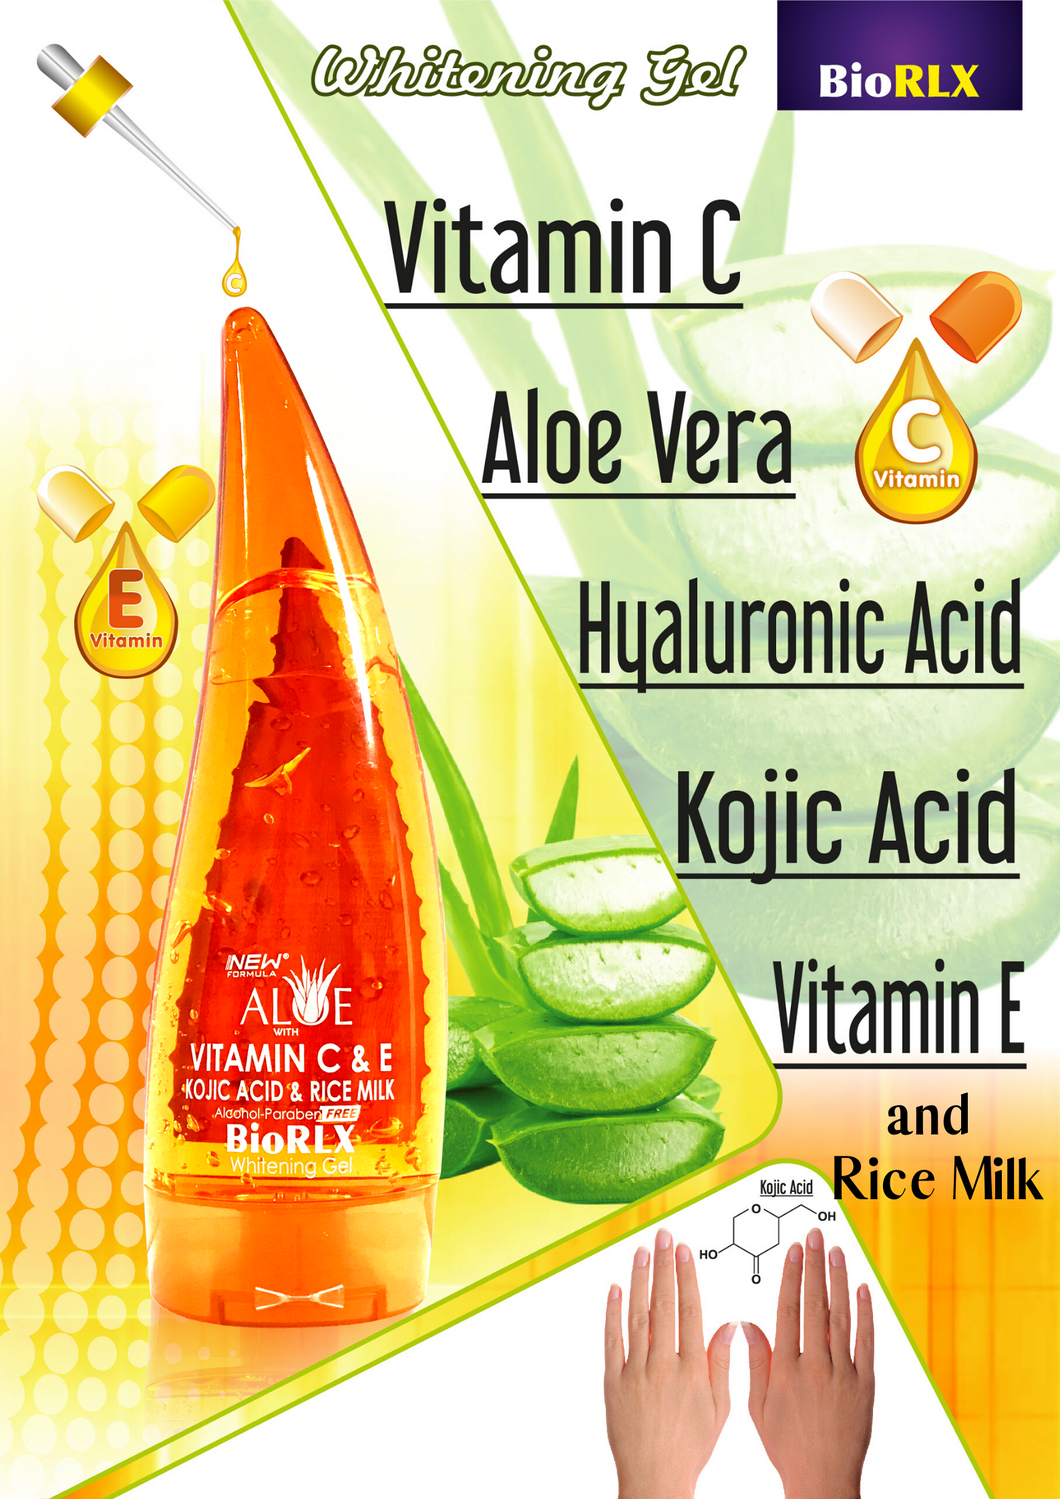 BioRLX Aloe Vera, Vitamin C, Kojic Acid and Rice Milk Gel 250ml